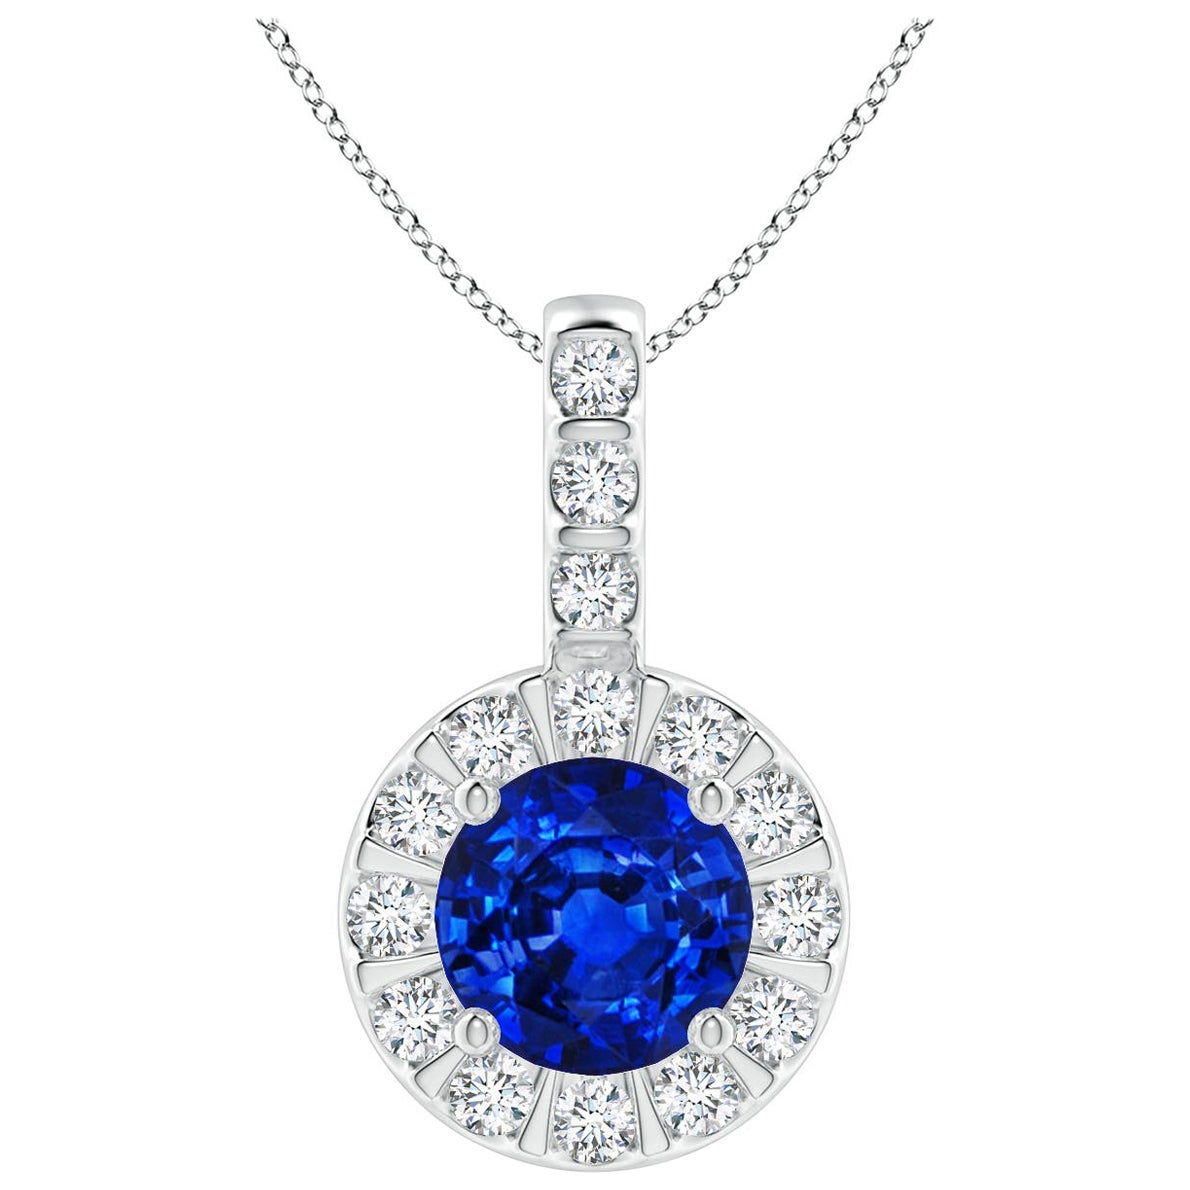 ANGARA Pendentif en platine avec saphir bleu naturel de 1 carat et halo de diamants